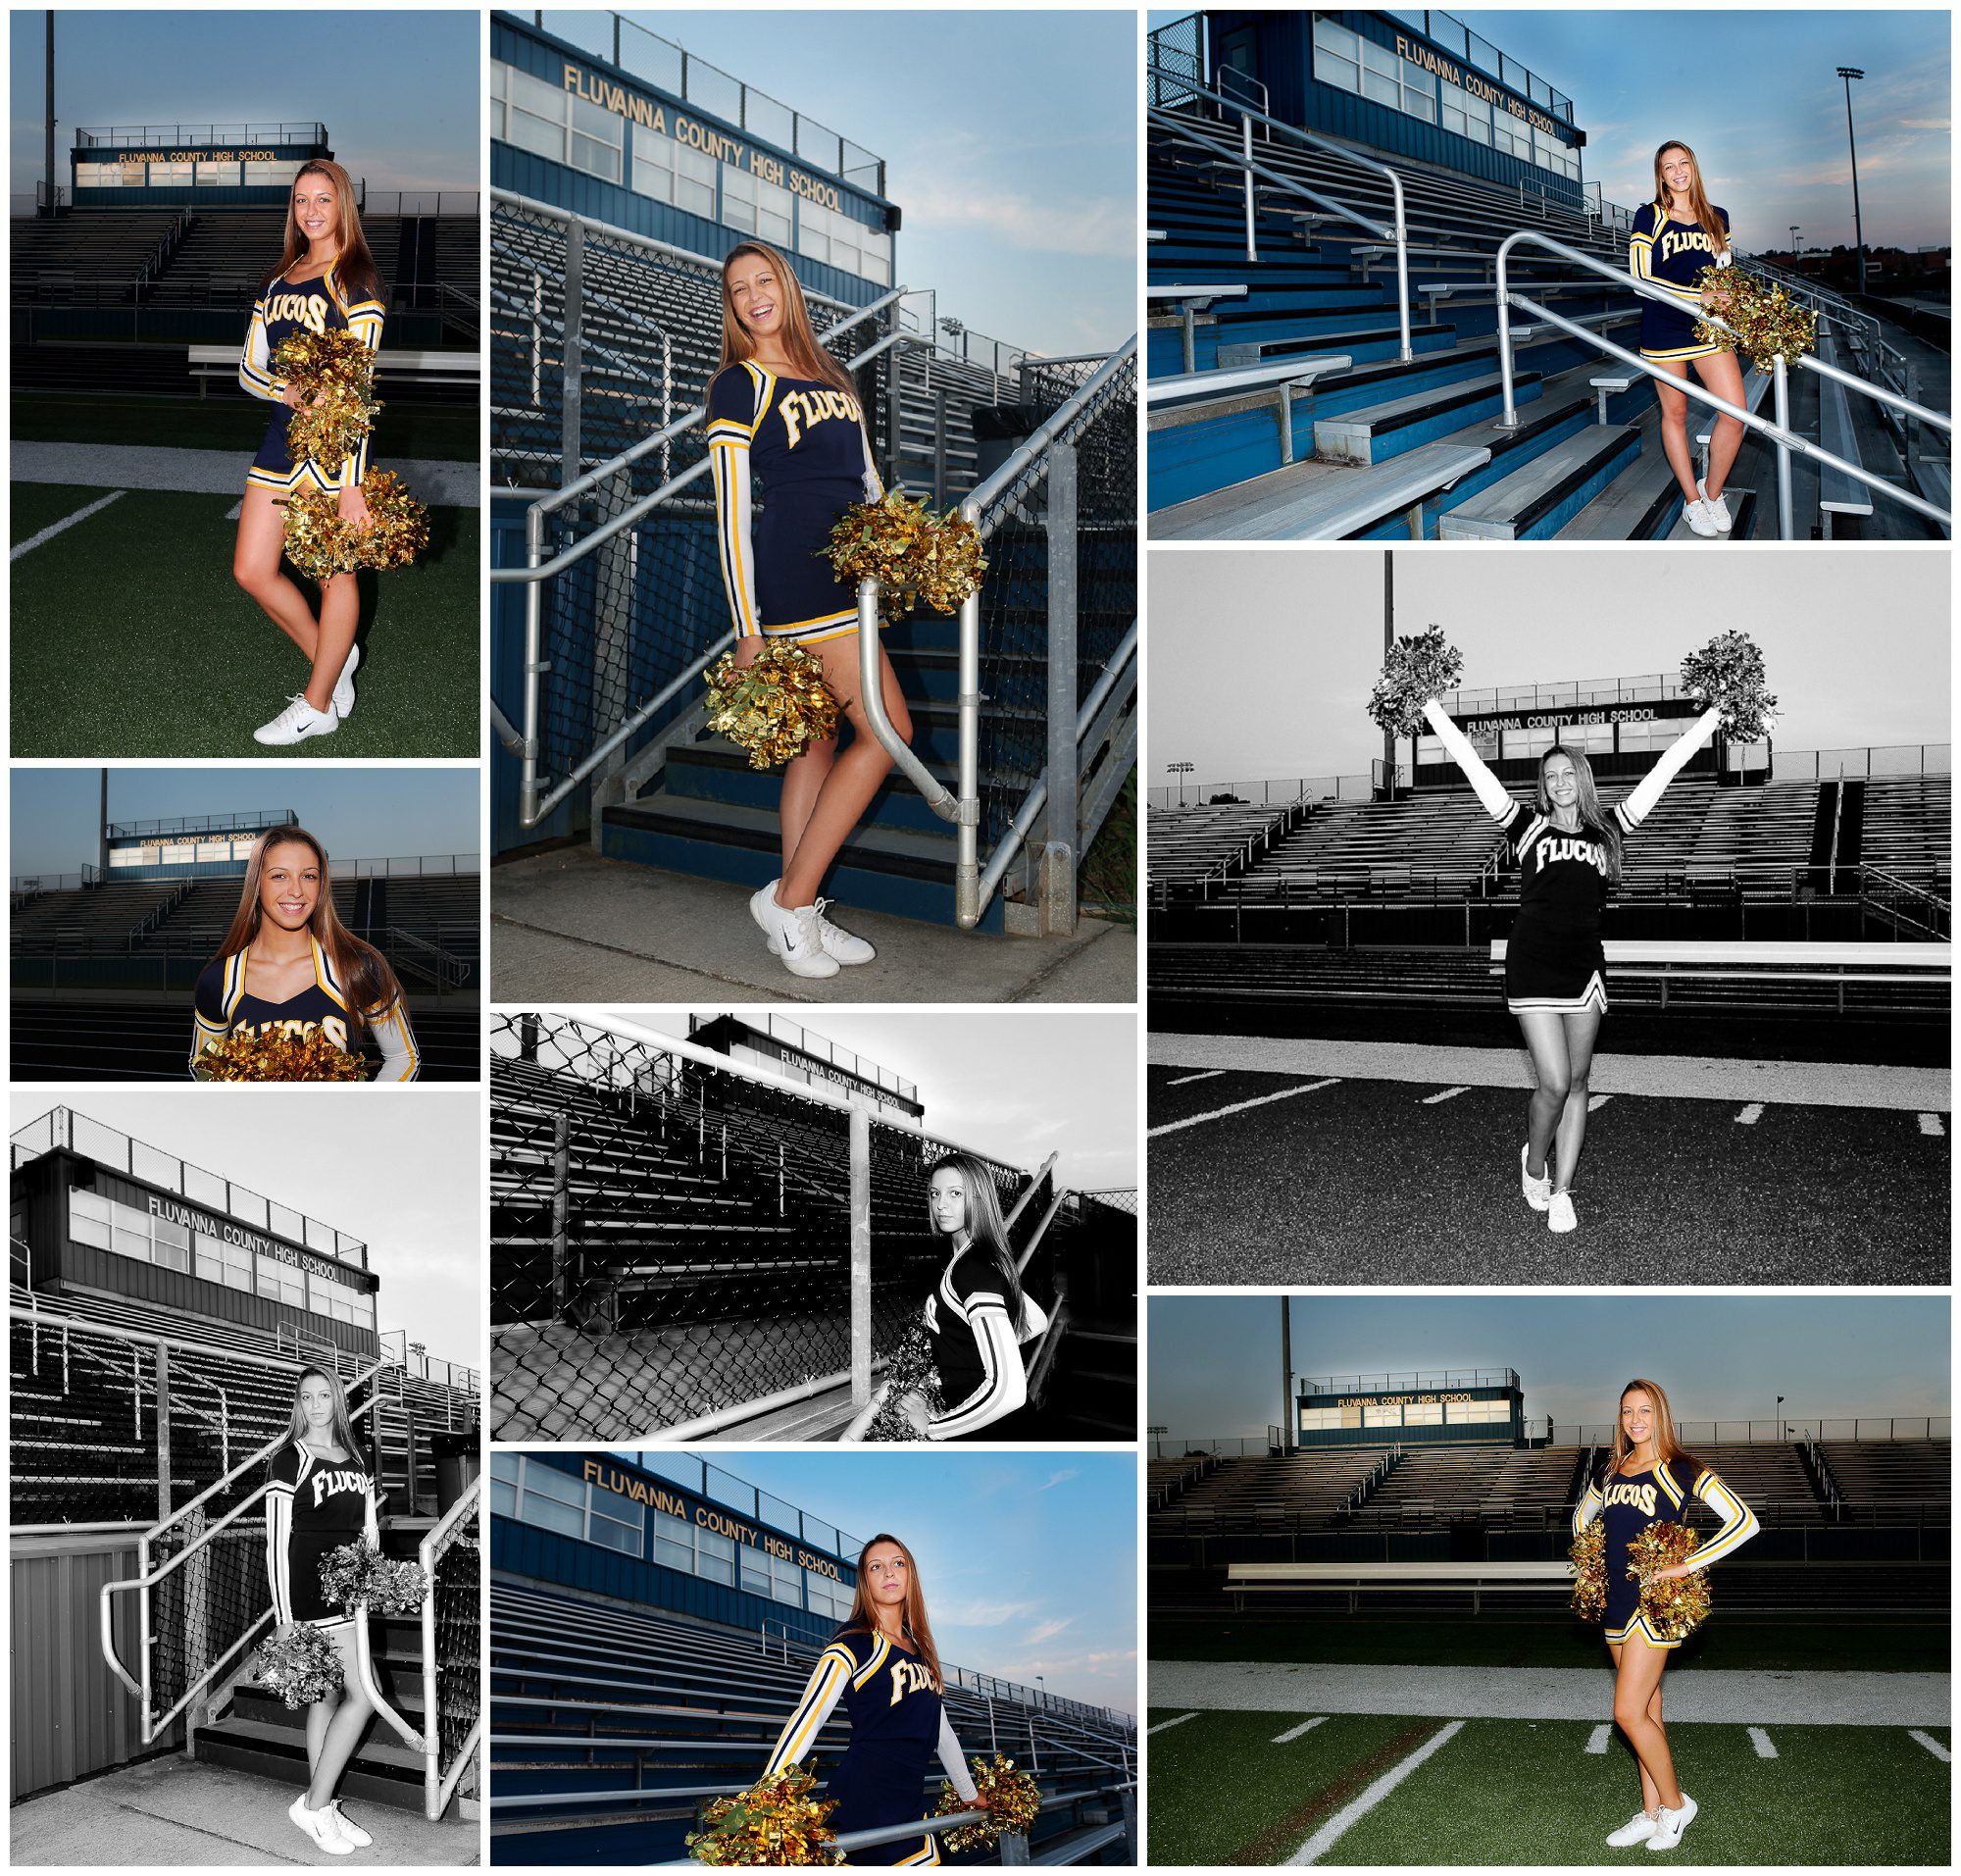 fchs senior portrait photographer cheerleader jump silhouette fluvanna county high school charlottesville cville photographer pictures football